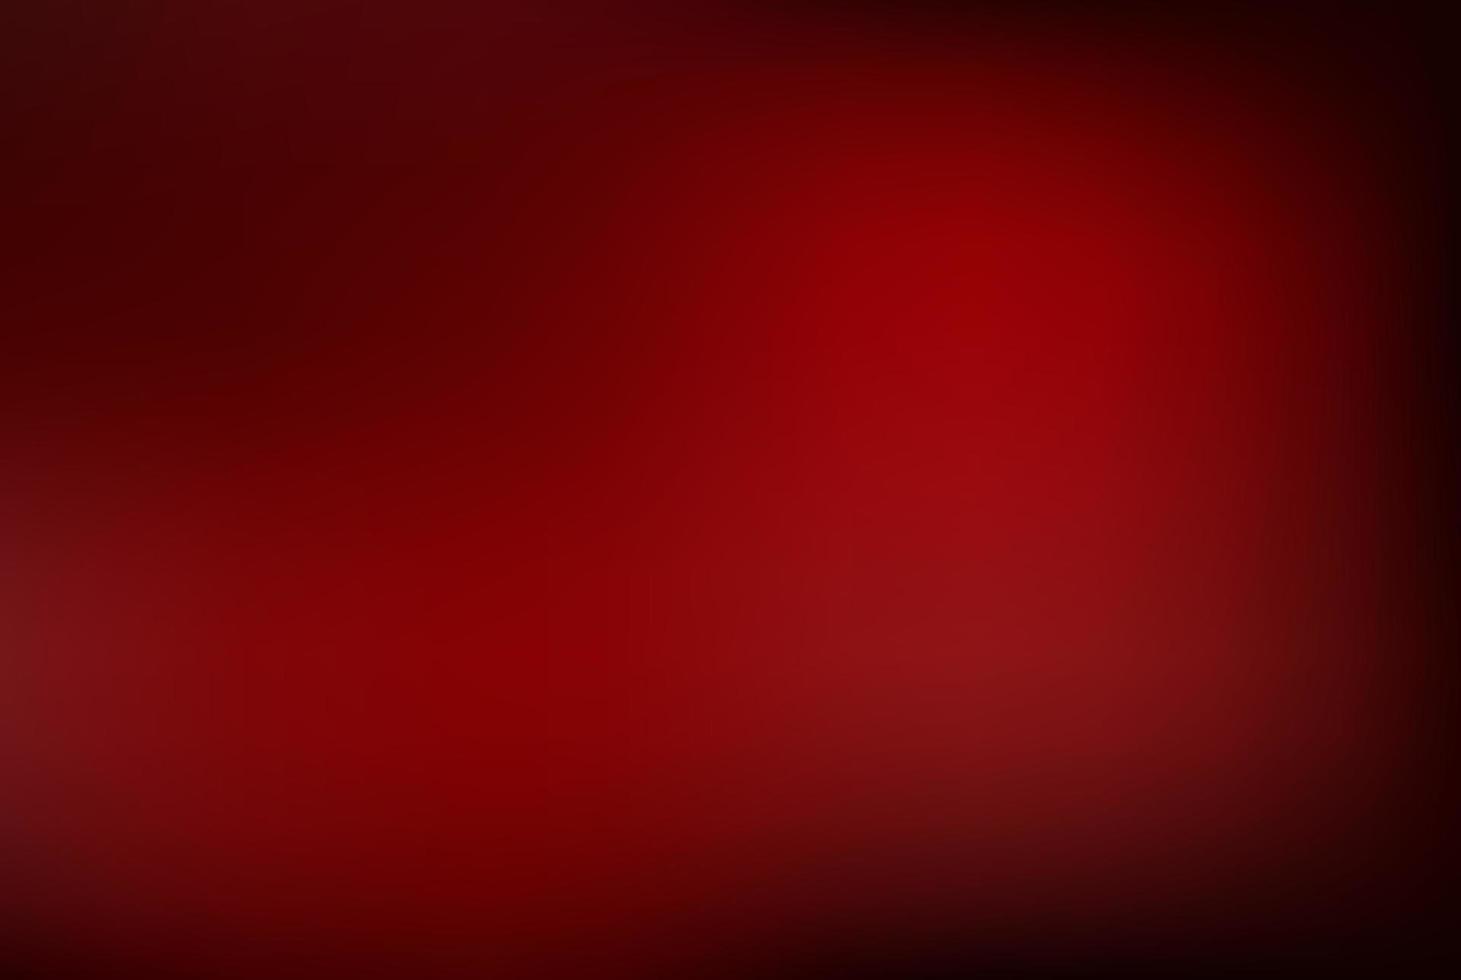 fondo de malla de degradado borroso de colores rojos abstractos. plantilla de banner suave colorido. concepto moderno para su diseño gráfico, pancarta o afiche. vector